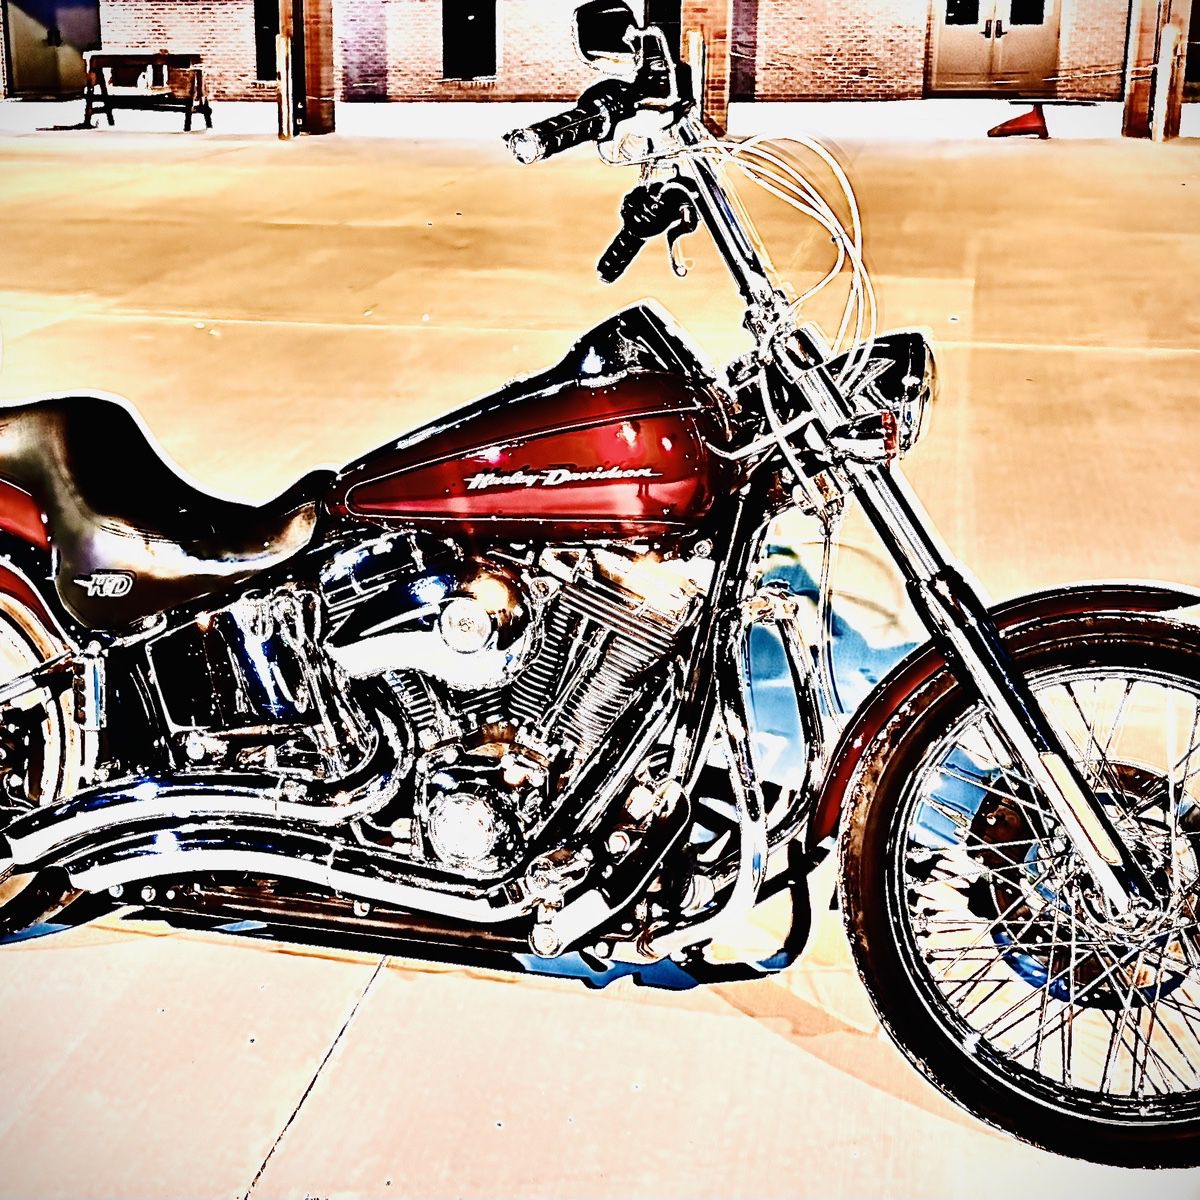 2008 Harley Davidson Heritage Deuce